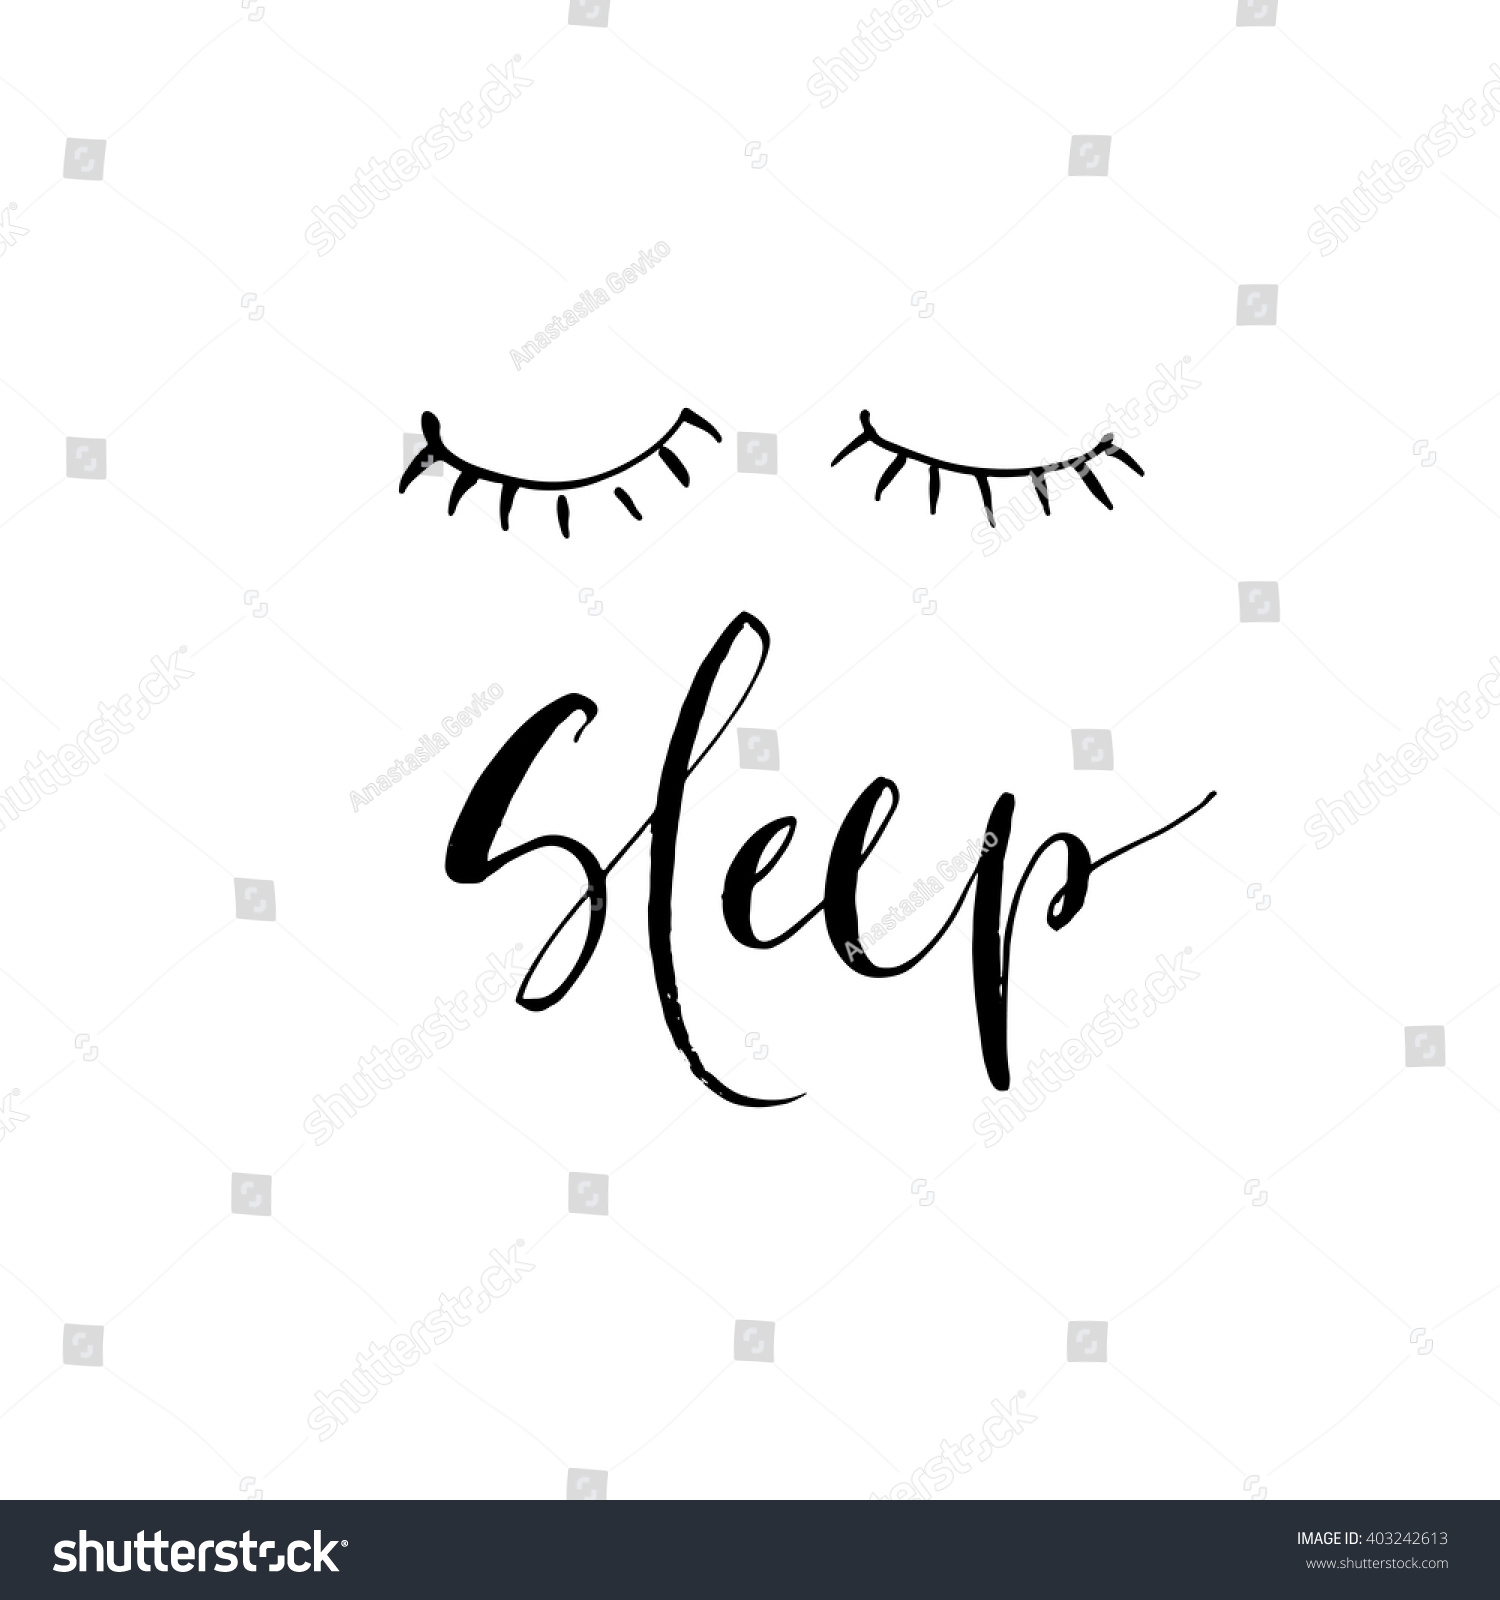 Hand Drawn Phrase Sleep Hand Drawn Stock Vector 403242613 - Shutterstock